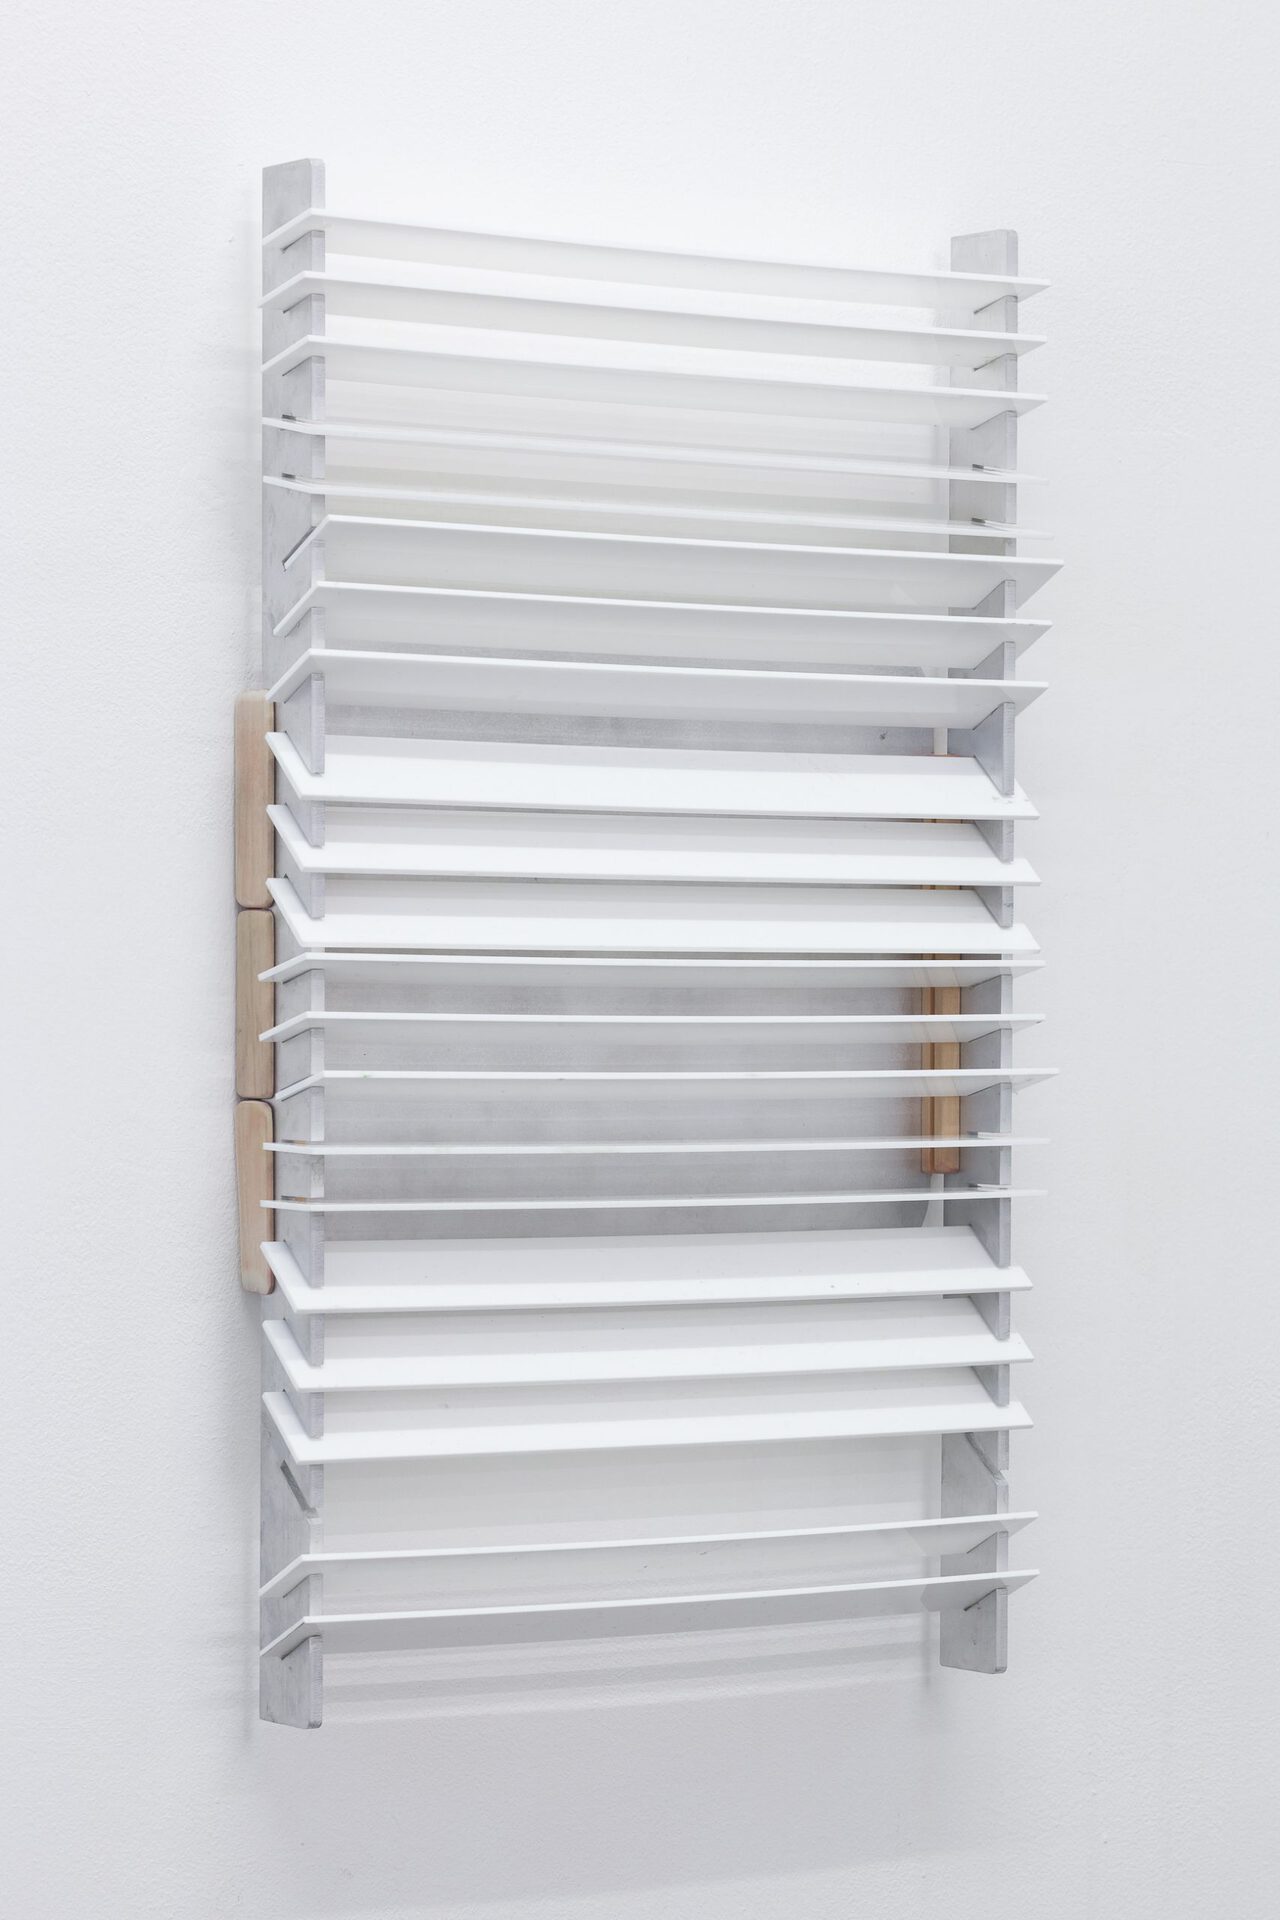 Elizabeth Orr, Spirits in Rotations, 2020, Aluminum, beet, wood, plexiglass, 63.5 x 38.1 x 7 cm, 25 x 15 x 3 in